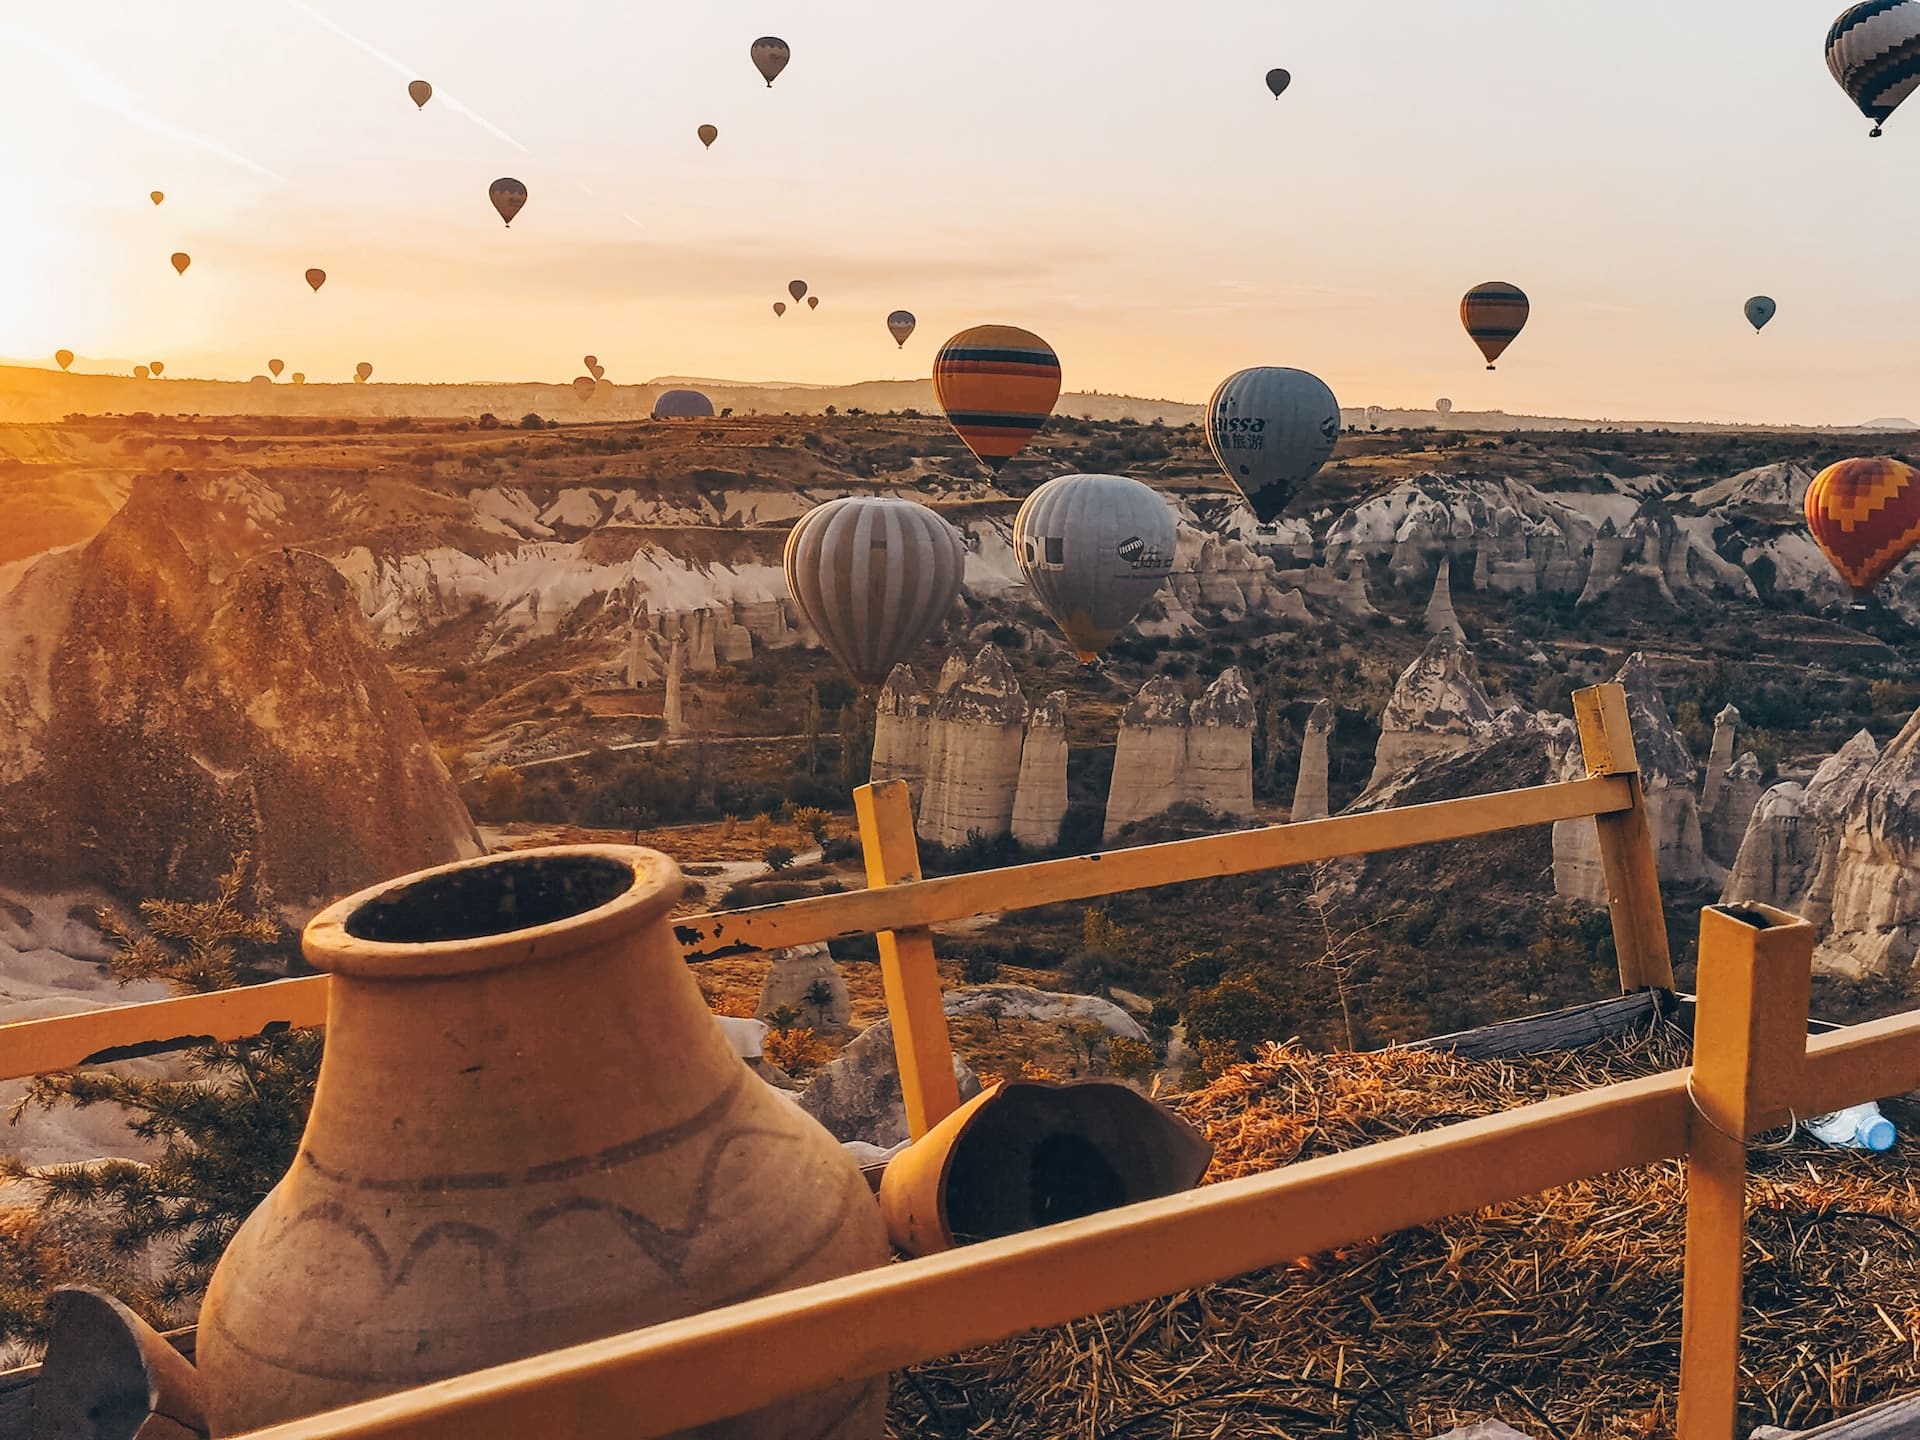 Morning view of Hot Air Balloons in Cappadocia